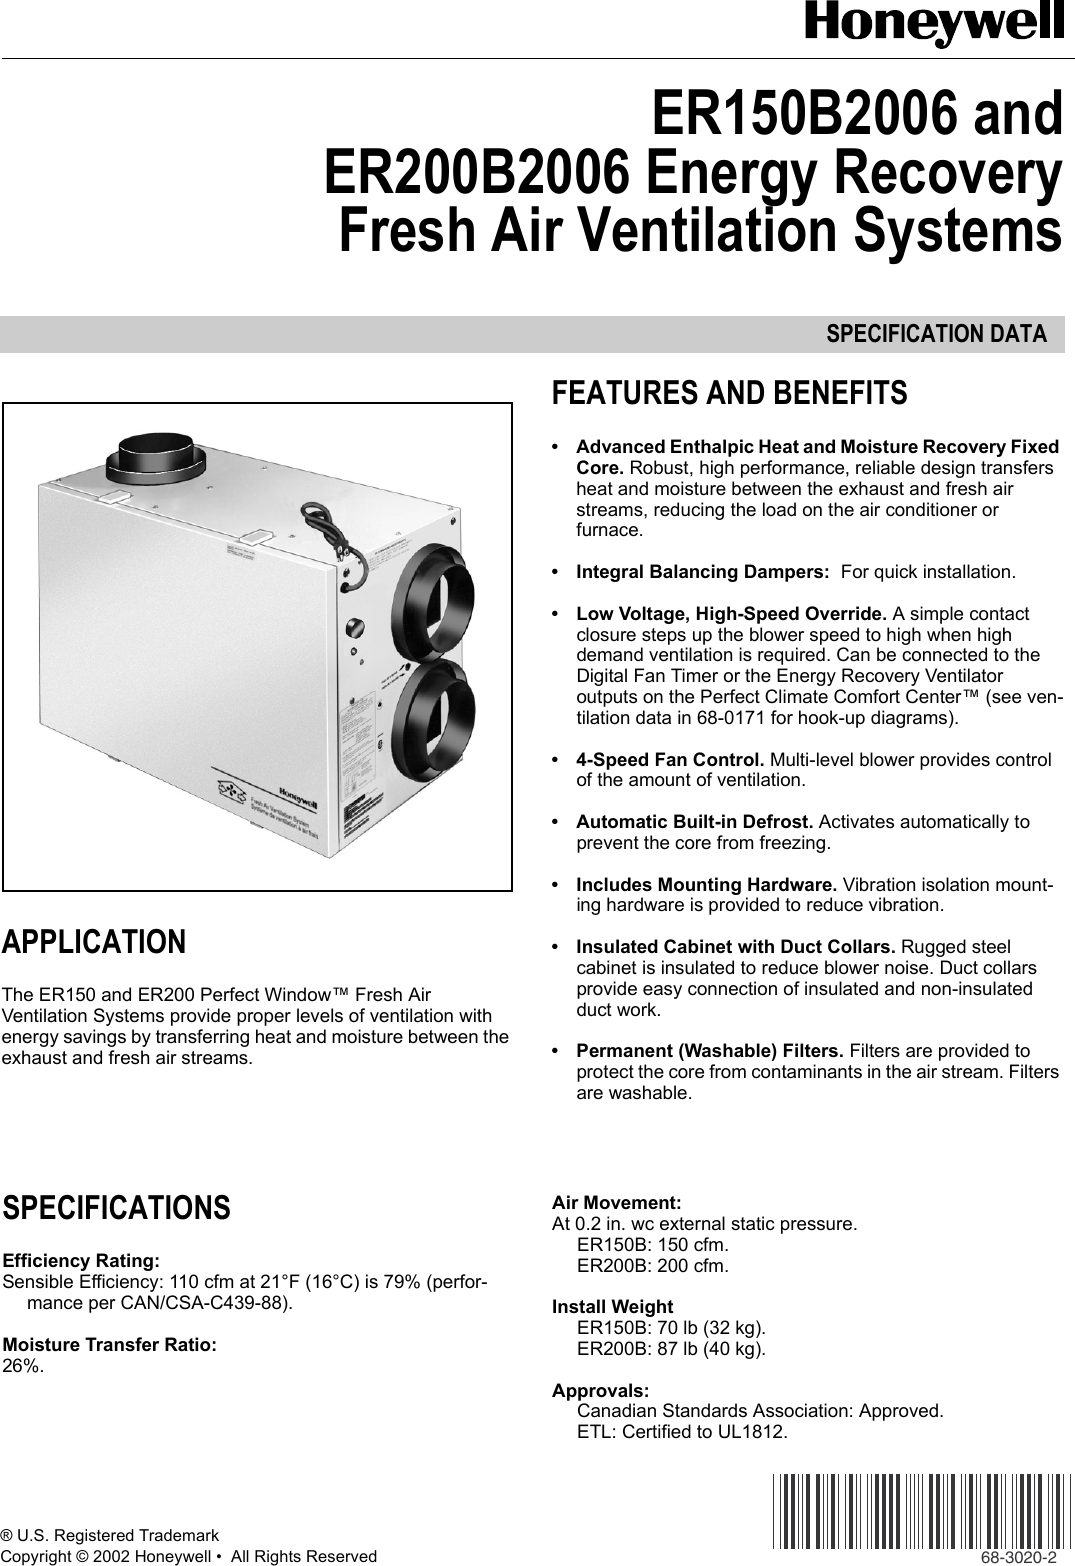 Page 1 of 2 - Honeywell Honeywell-Er150B2006-Users-Manual- 68-3020 - ER150B2006 And ER200B2006 Energy Recovery Fresh Air Ventilation Systems  Honeywell-er150b2006-users-manual